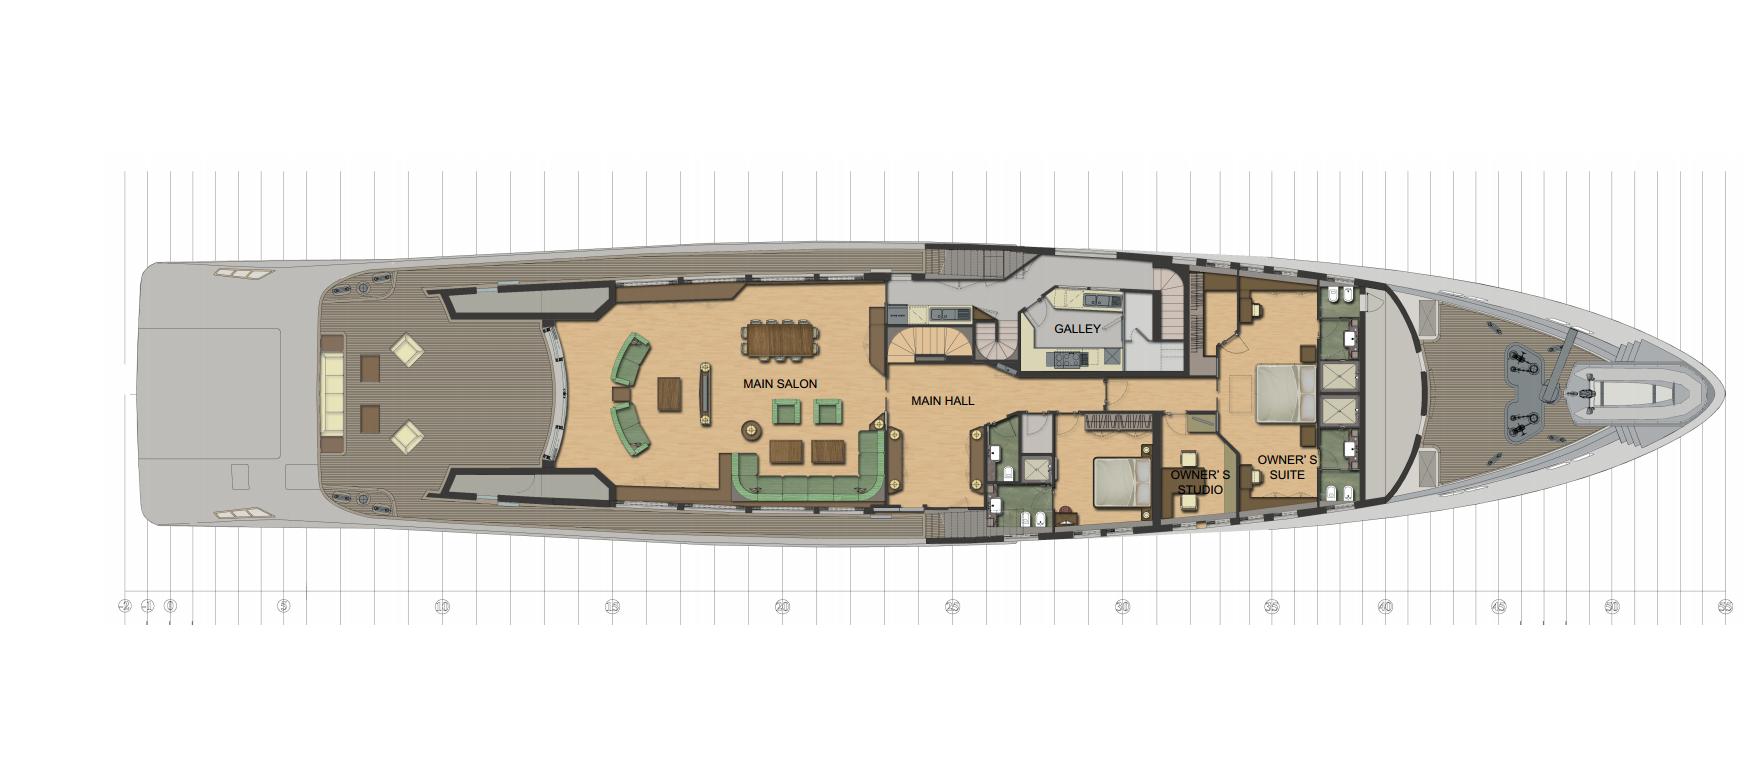 56+main+deck-yacht-general+arrangement-architect-carignani-design-concept-luxury-boat-motor